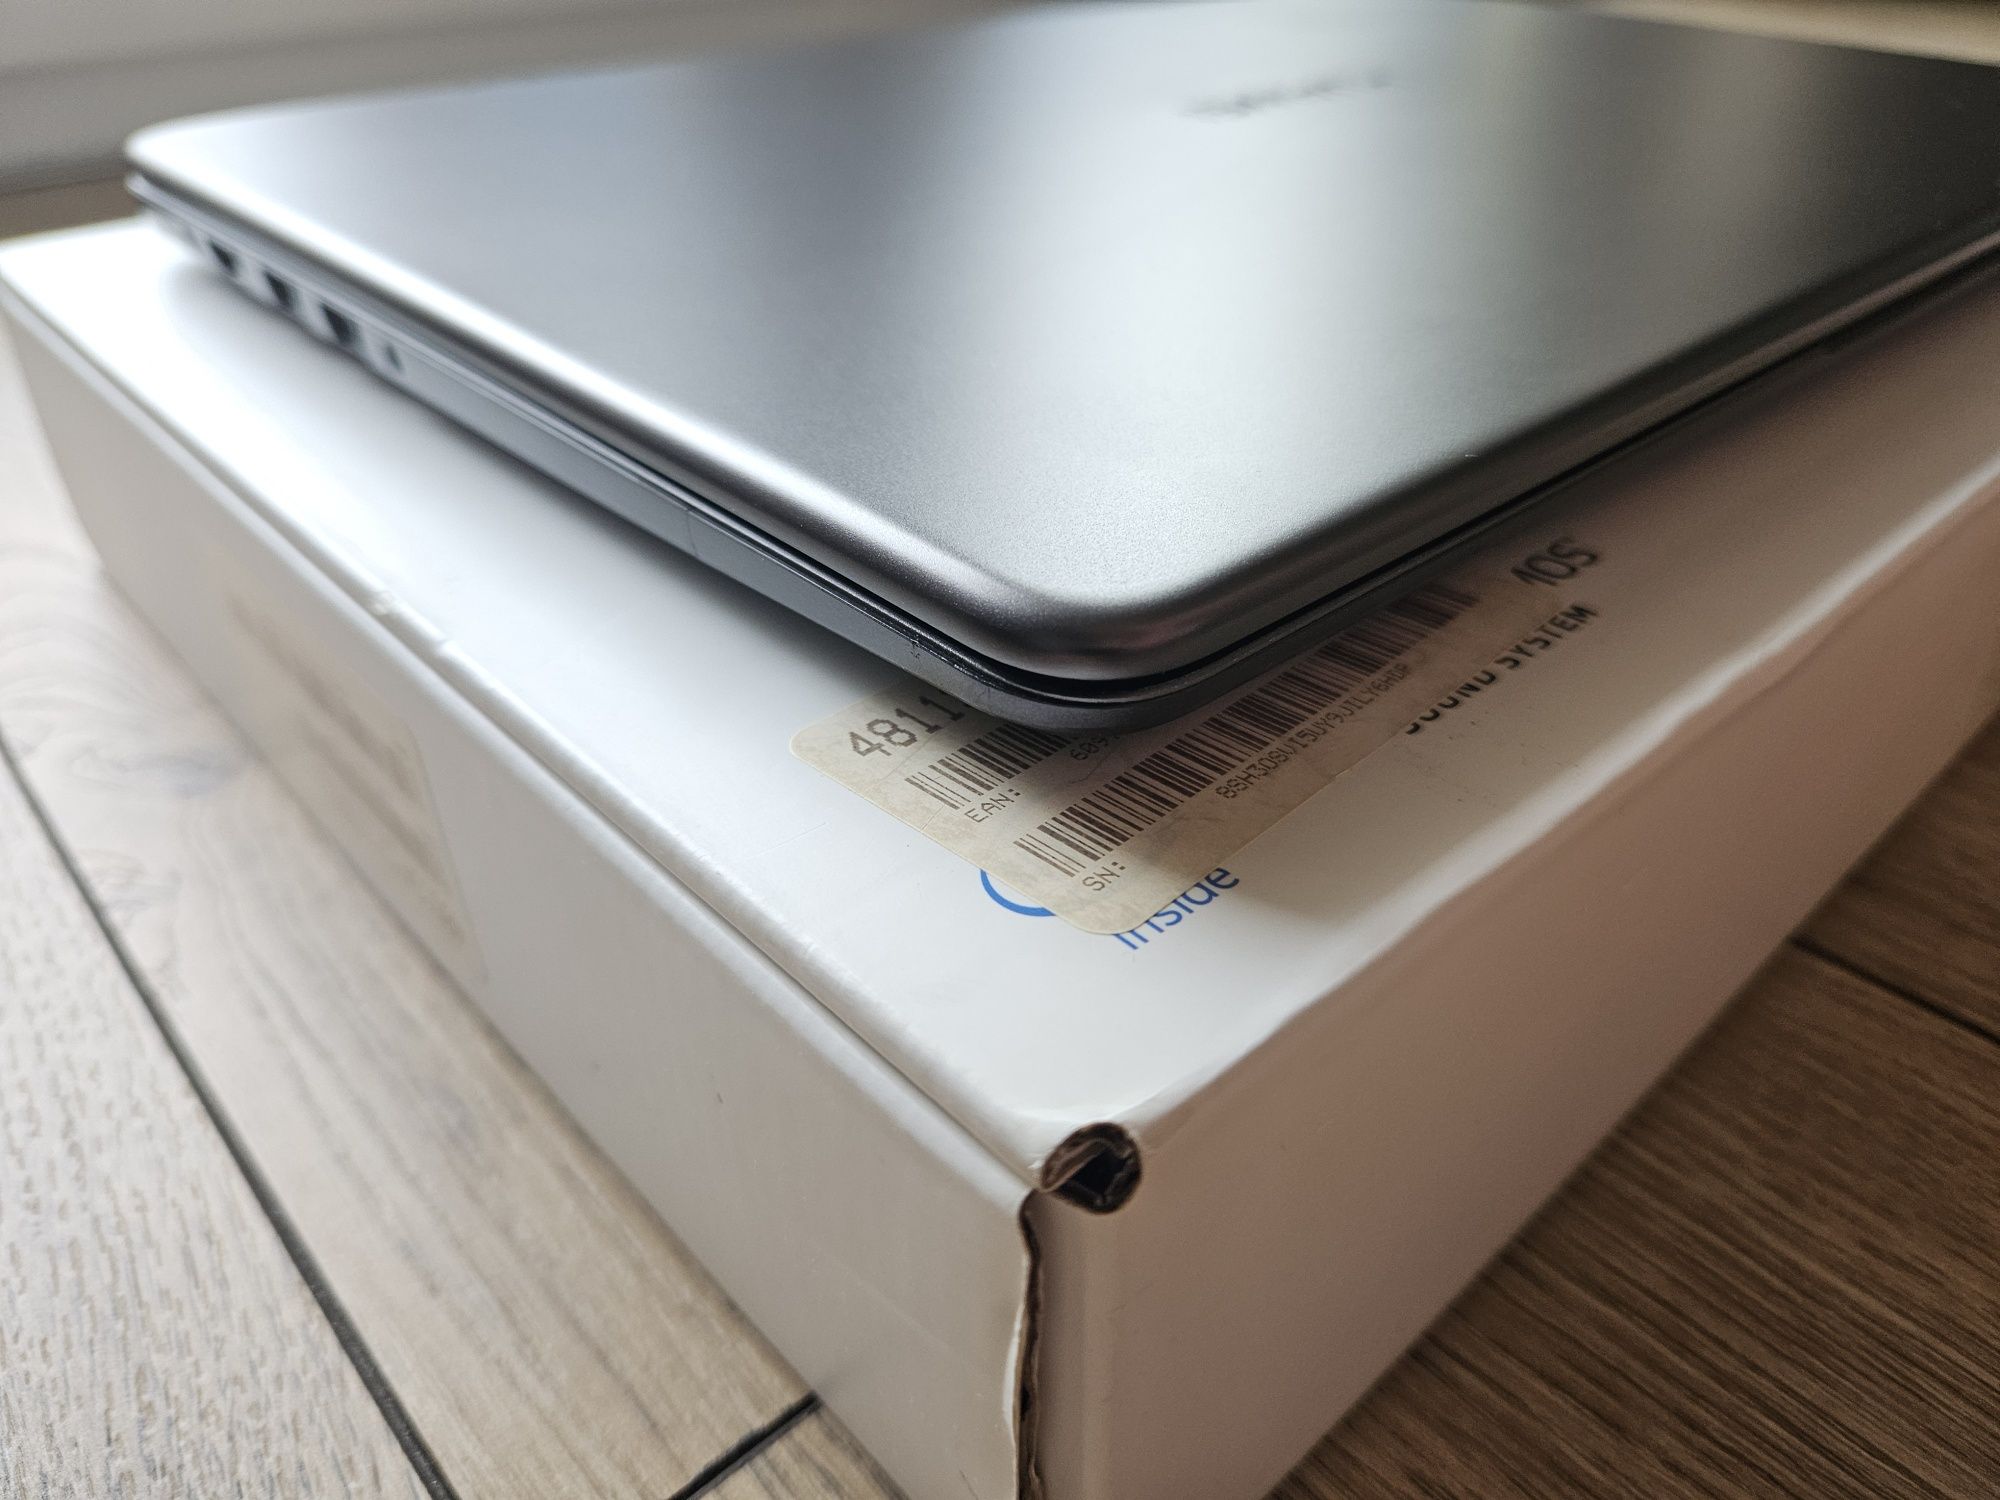 Laptop Huawei MateBook D 15.6 i5-8250u, GeForce MX150, 2 dyski!